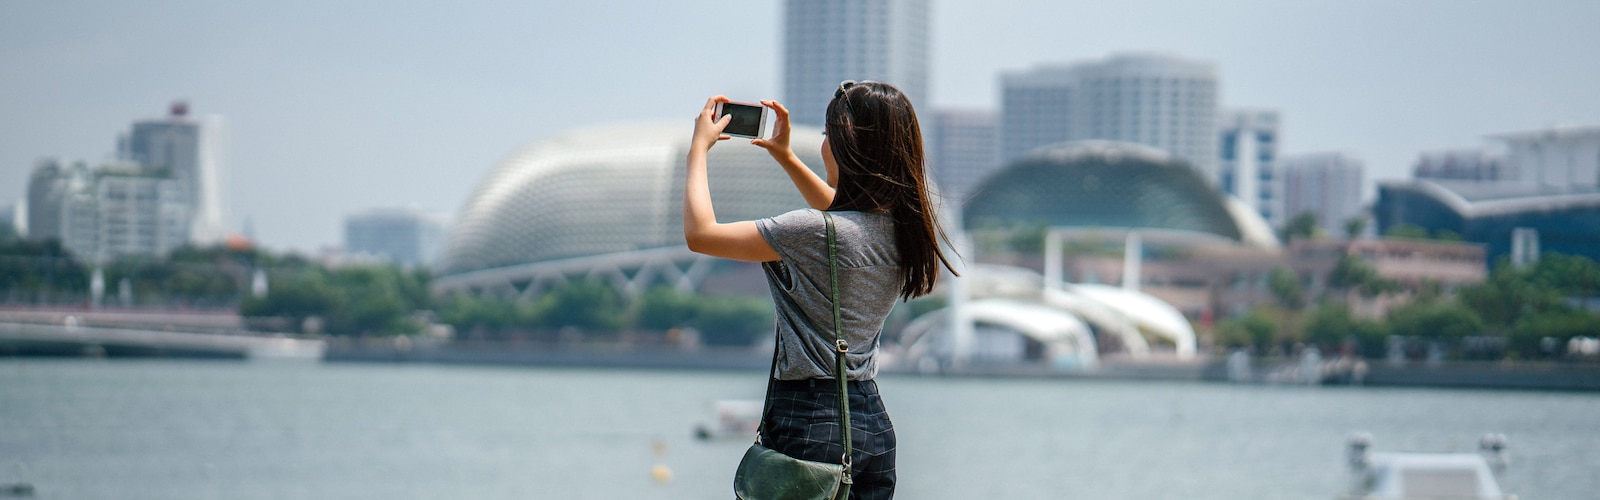 Kobieta fotografuje iPhonem panoramę miasta.